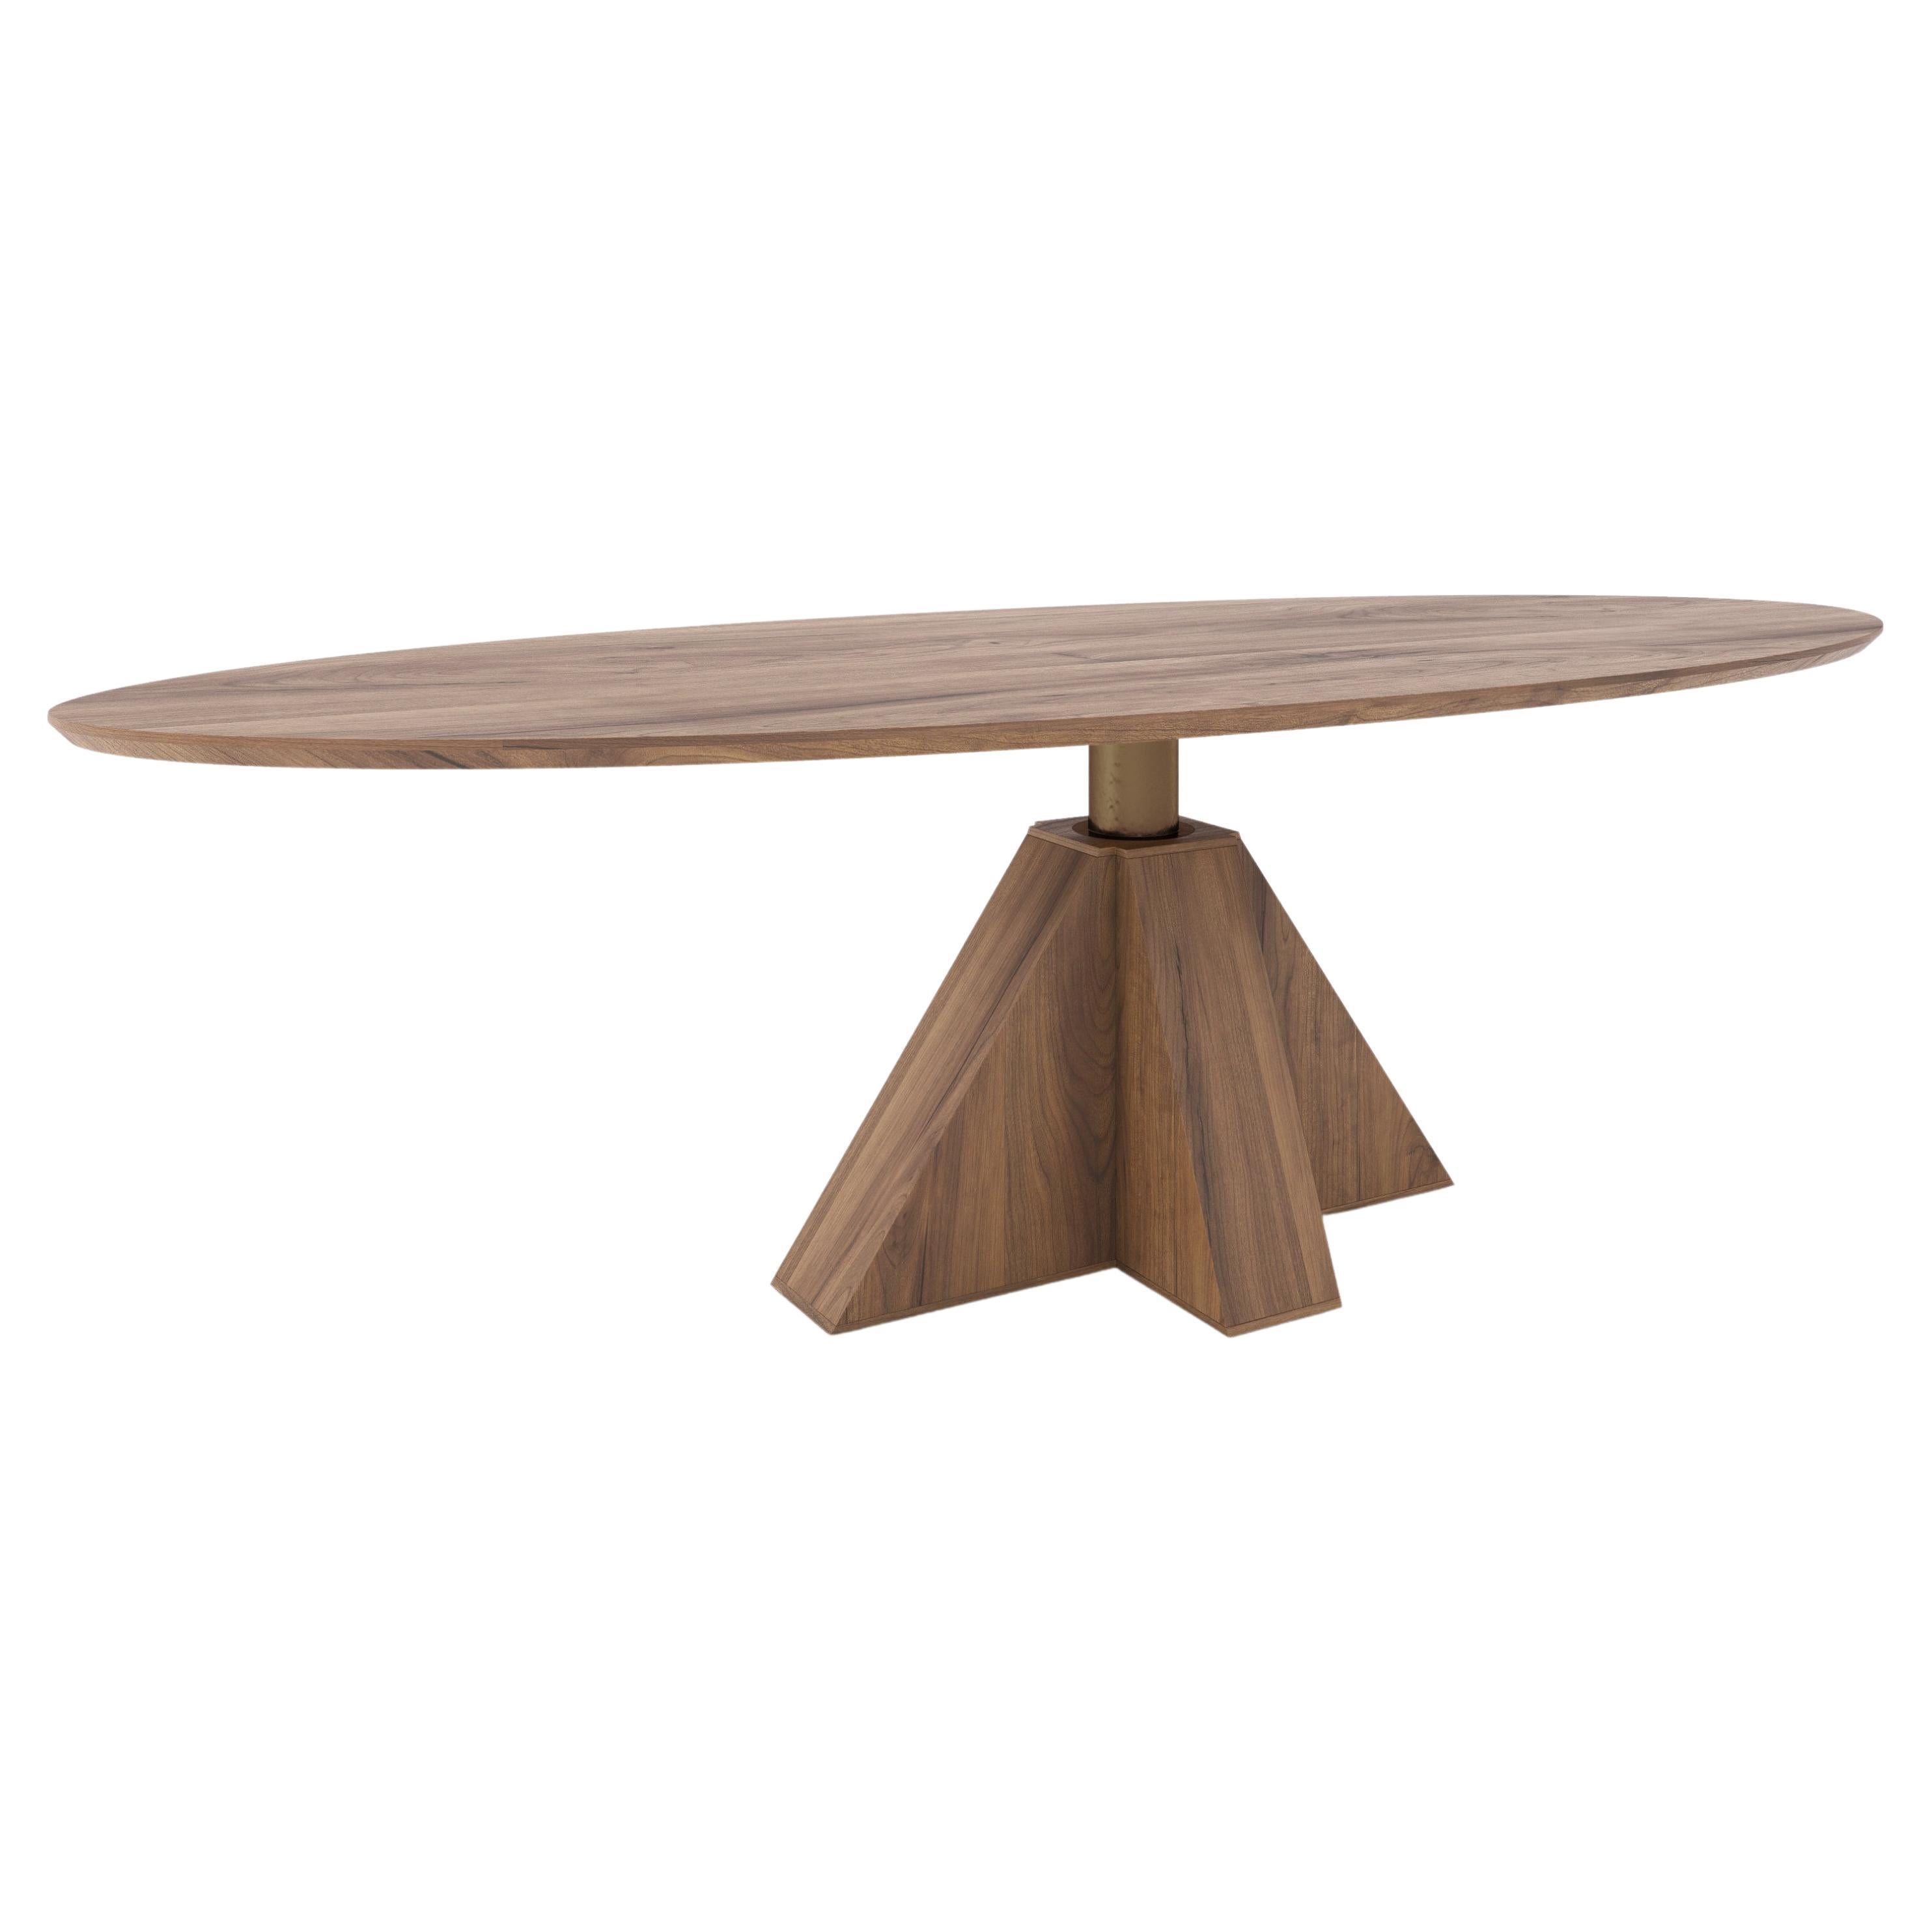 M-Oval Table by Daniel Boddam, 70" x 41", Walnut For Sale